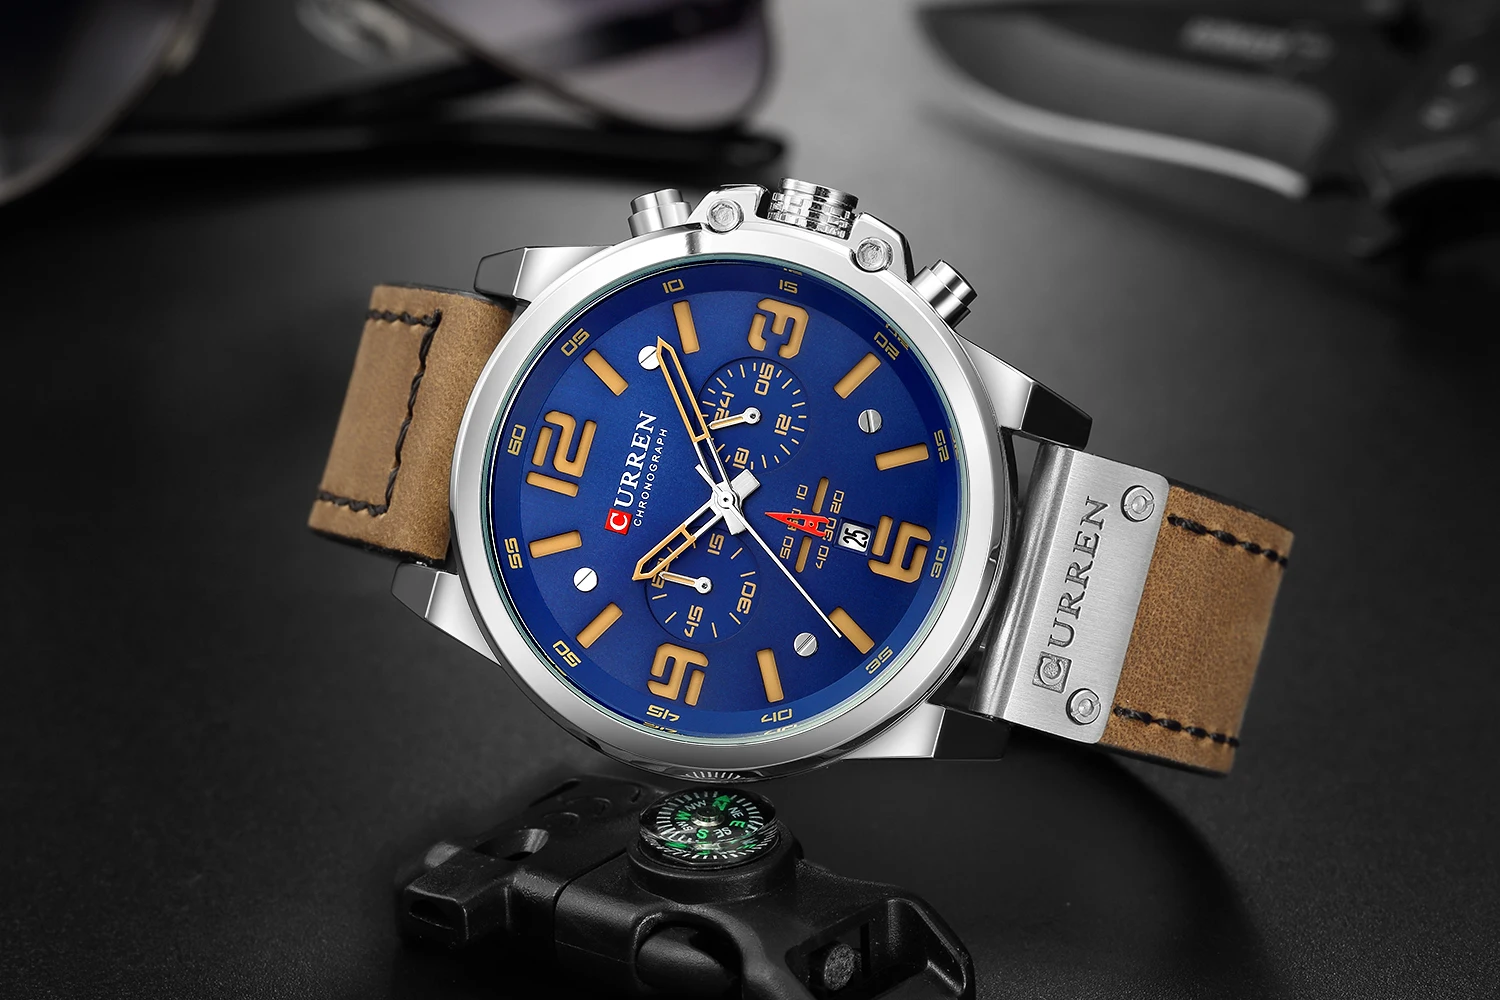 Reloj Brand Logo Curren 8314 Men Original Quartz Watch Fashion Charm Style Luxury Wristwatches Fashion Watch For Man